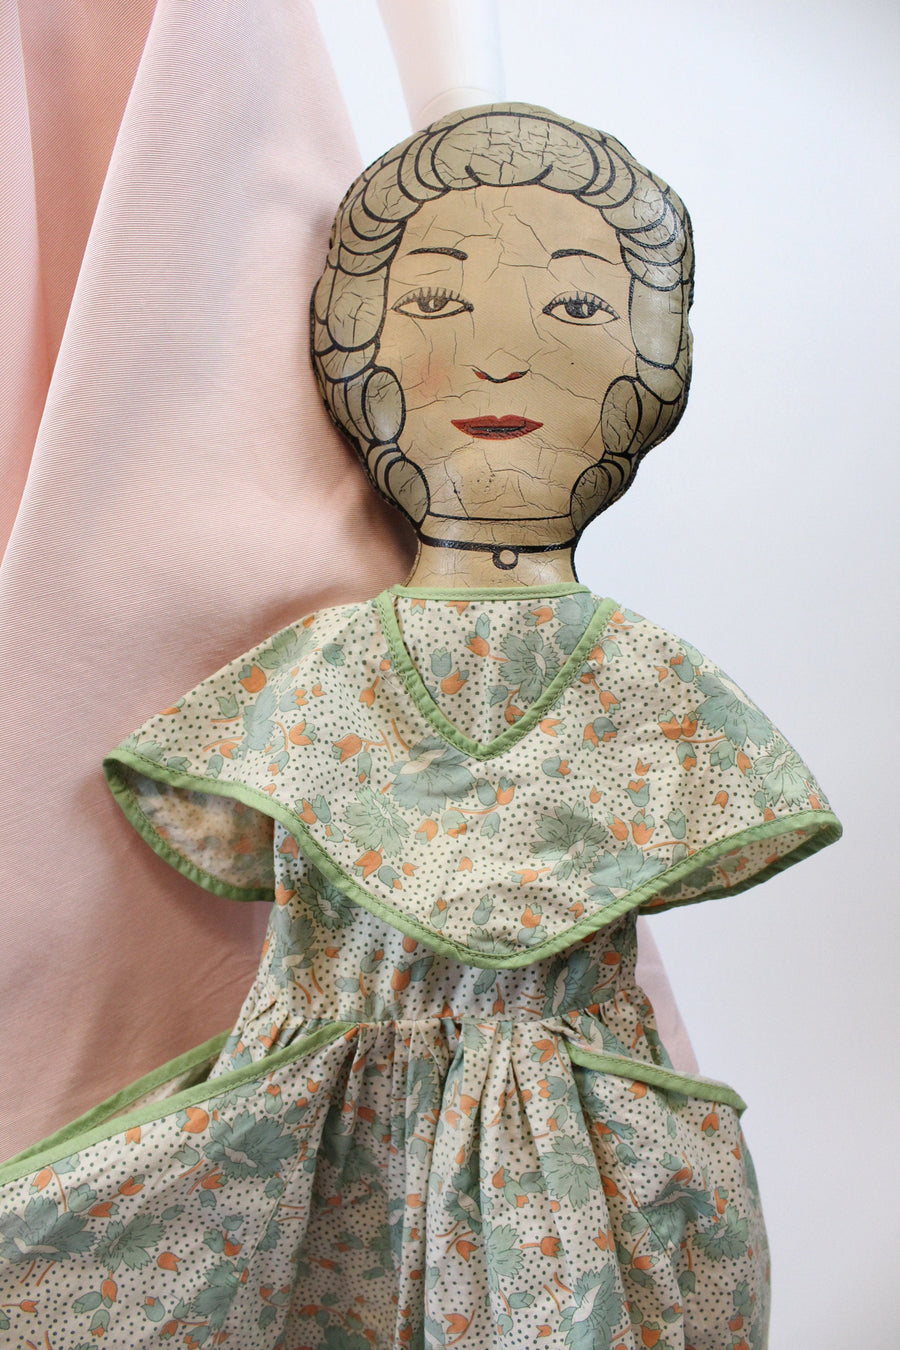 1920s doll purse large | feedsack dress handbag